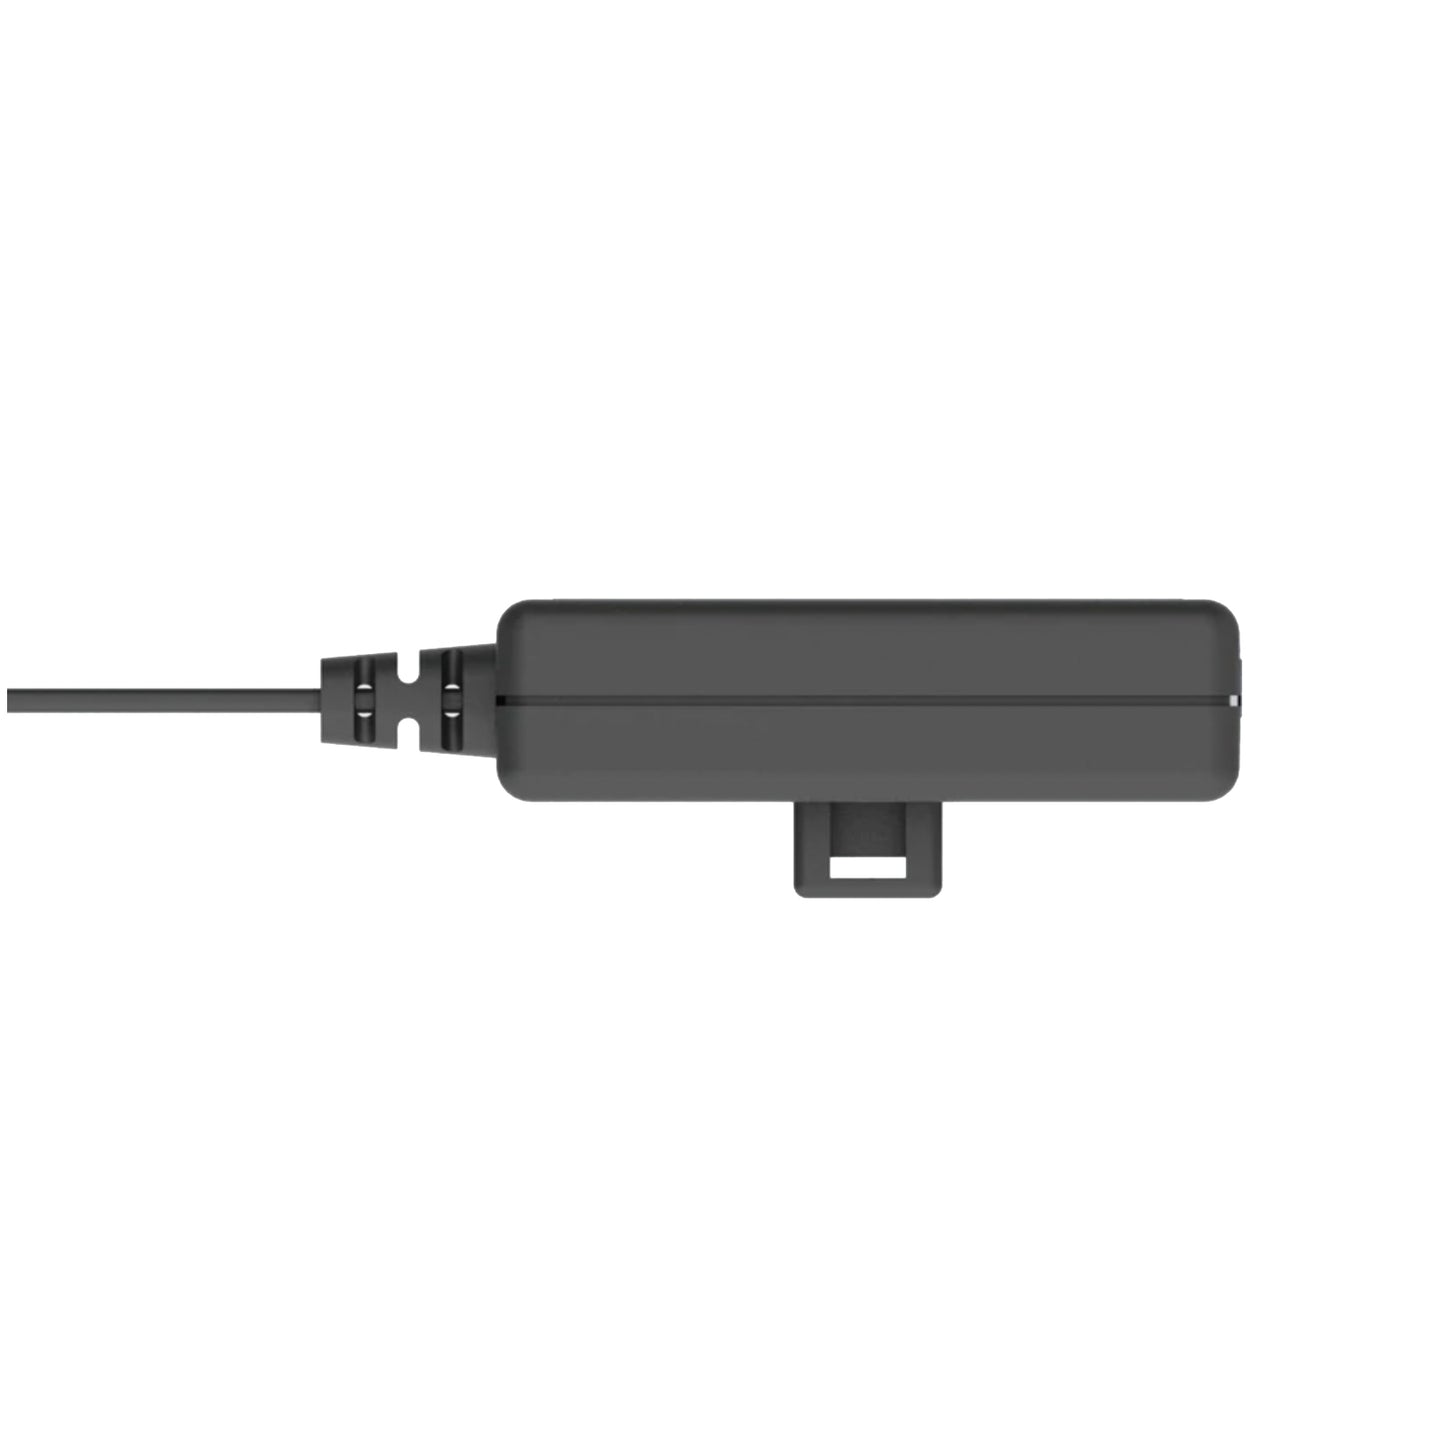 Sinewave Revolution Dynamo USB Charger